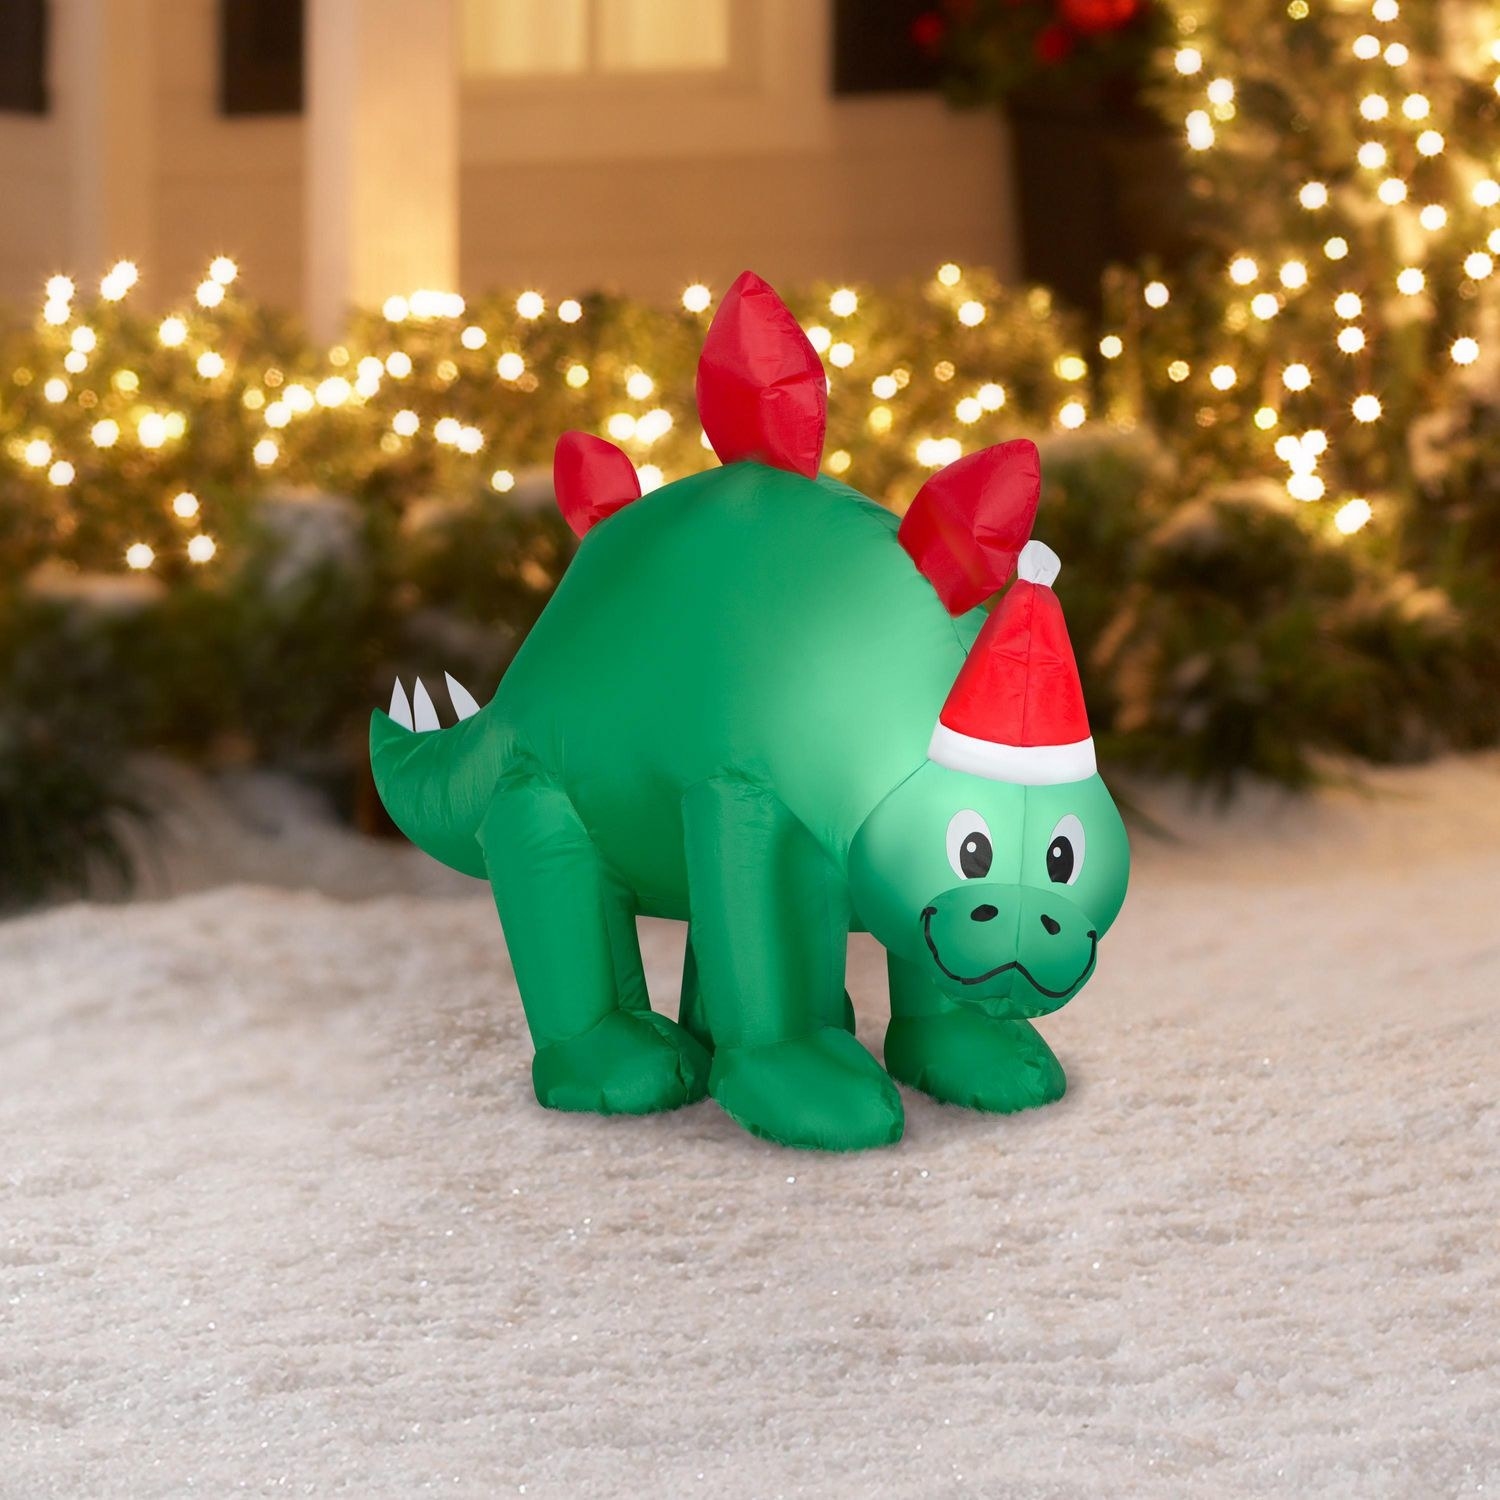 the stegosaurus with a Santa hat on